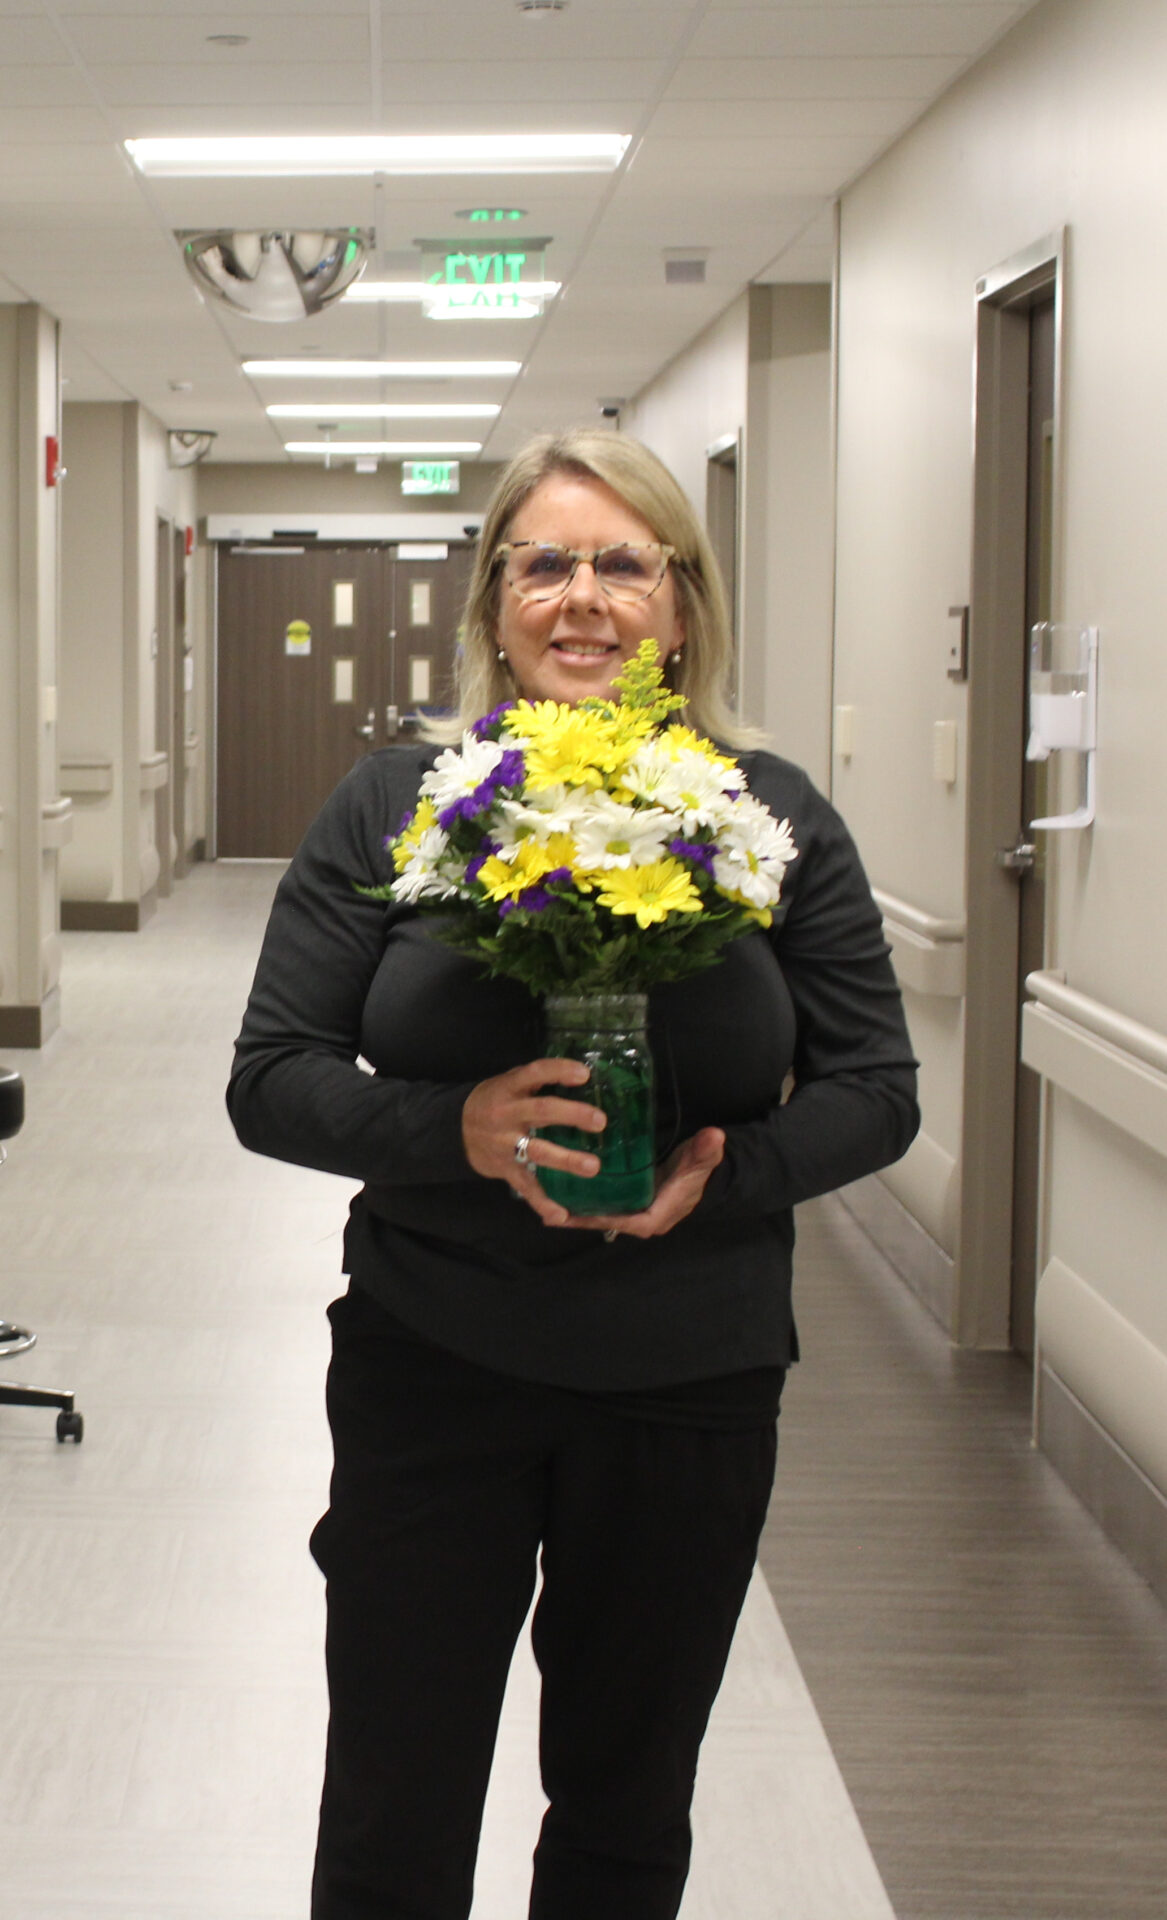 Pamela is pictured holding a DAISY flower arrangement in hallway.